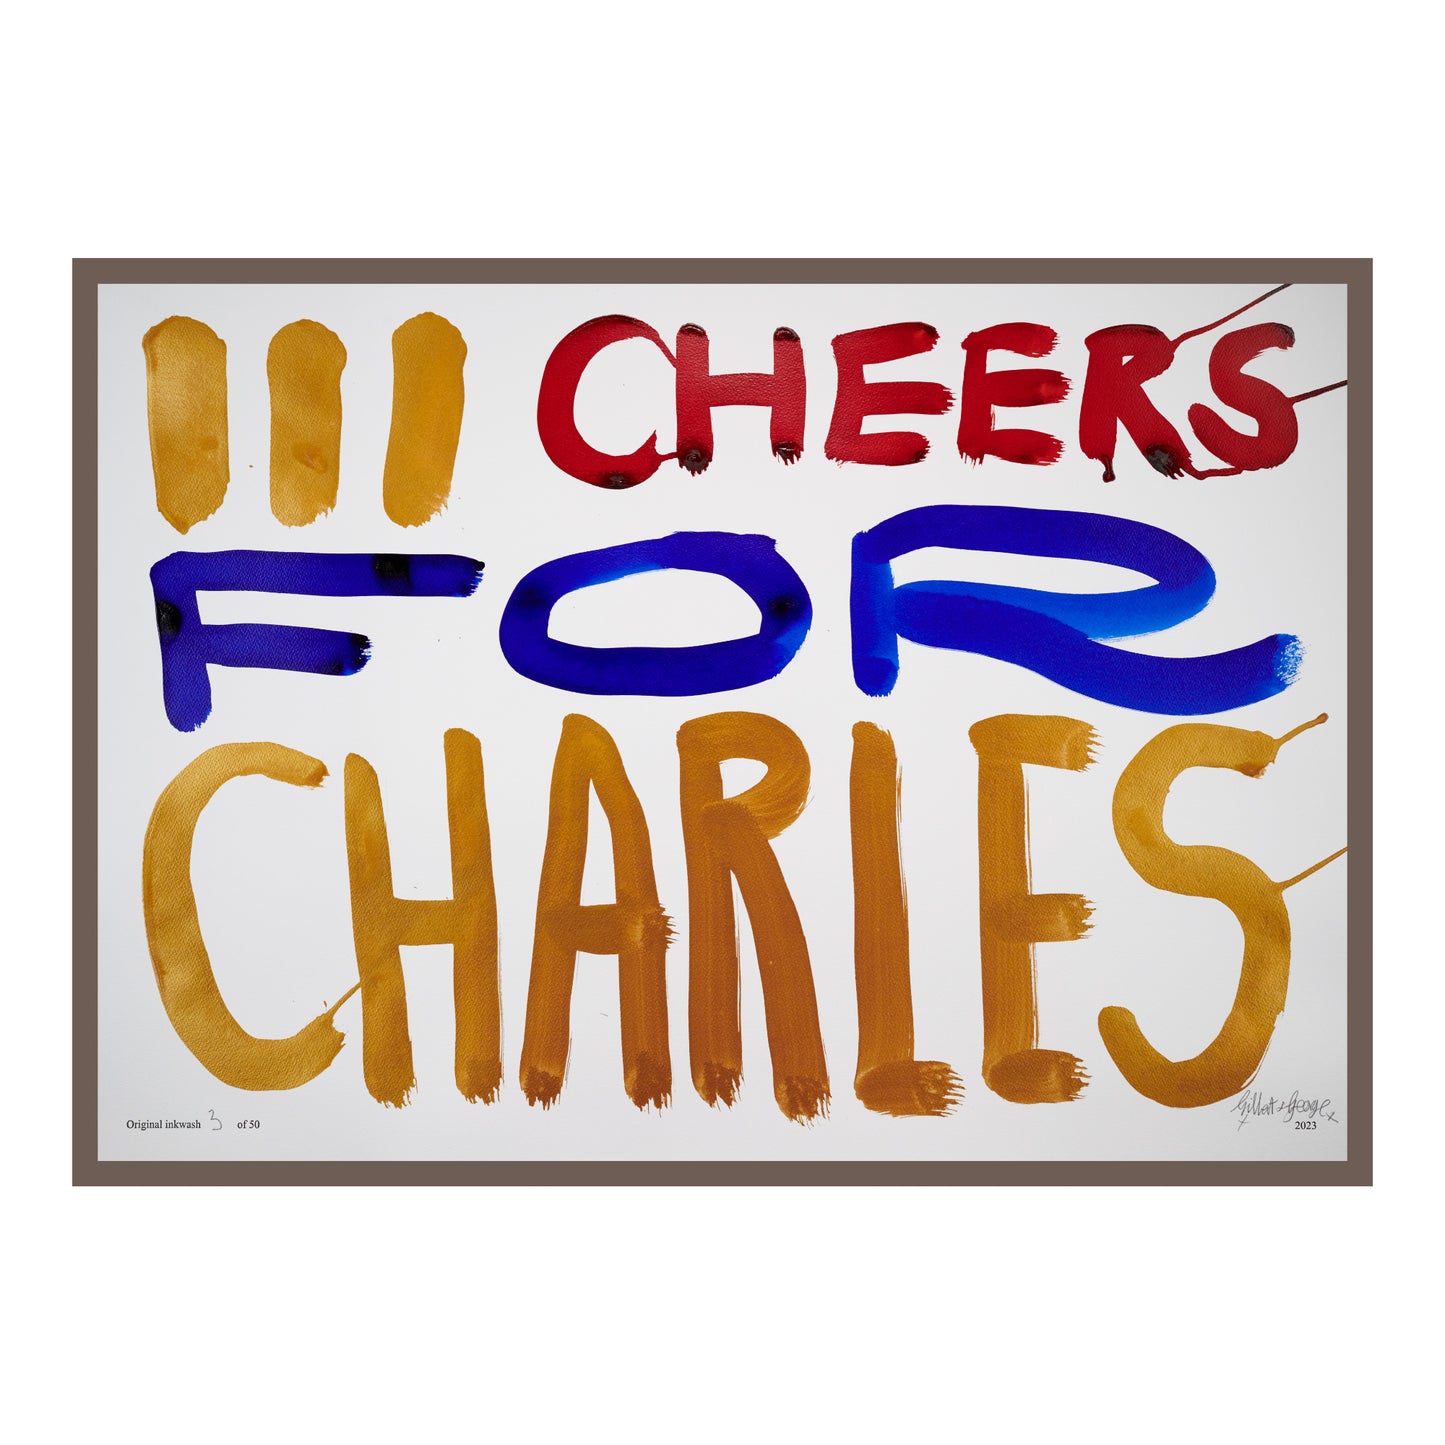 III CHEERS FOR CHARLES